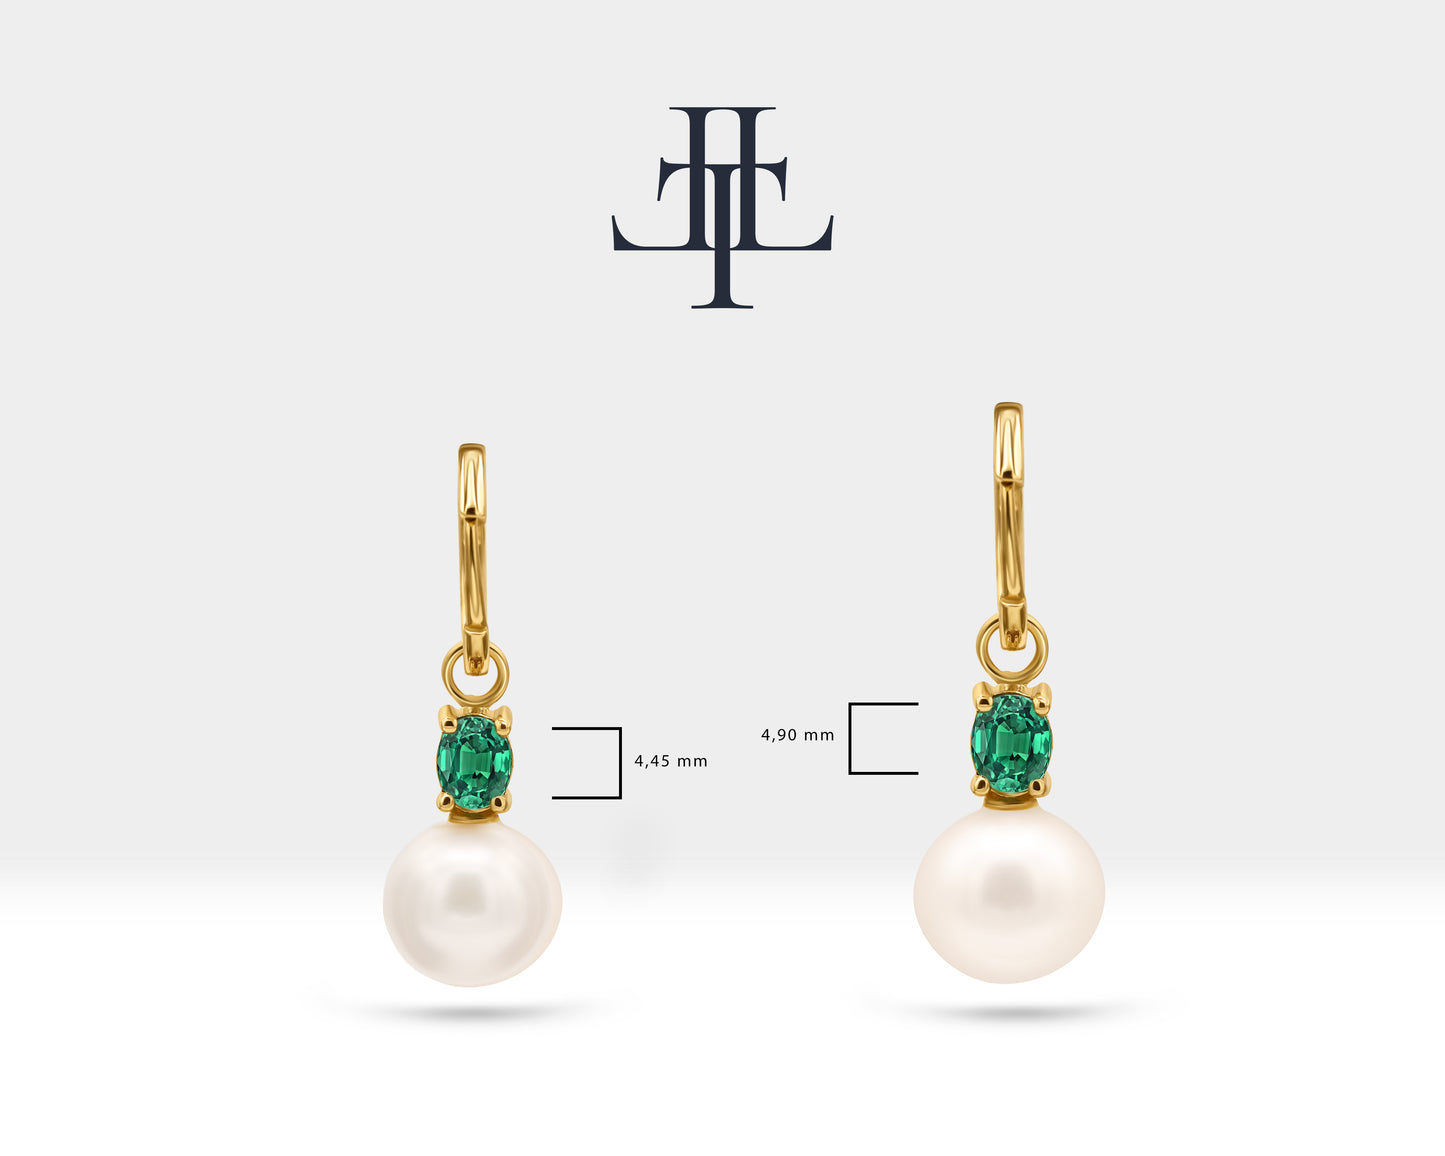 Pearl Earring with Emerald Huggies Hoop in 14K Solid Gold Bridal Jewelry Earrings Dangle Hoops for Wedding| LE00079PE